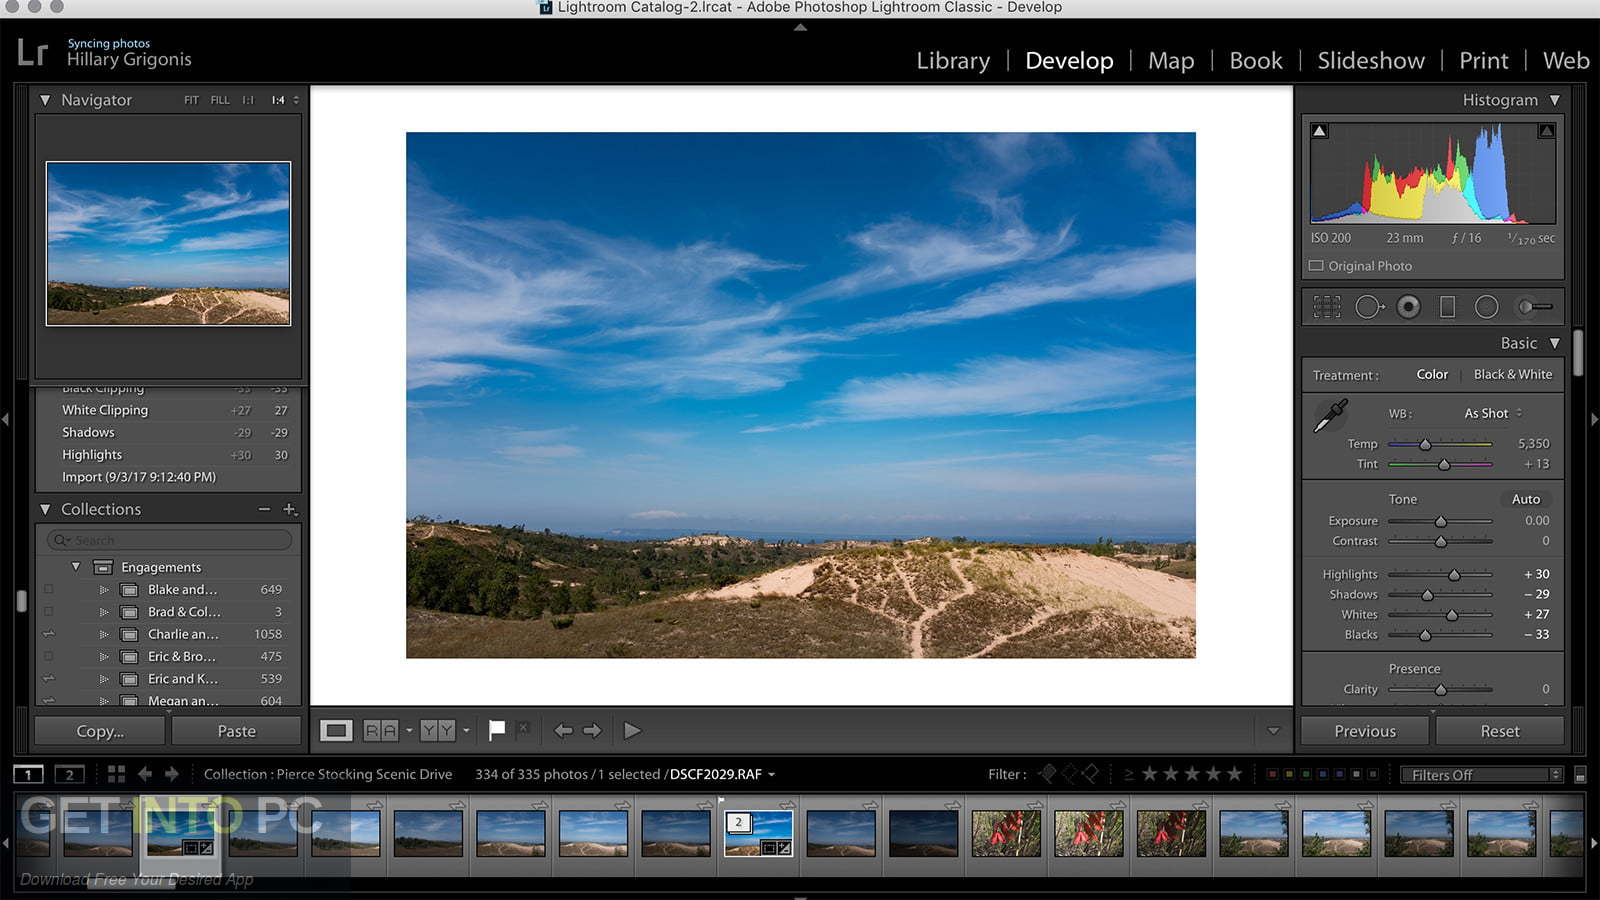 Adobe Photoshop Cc 2018 20.0.0 Patch For Mac